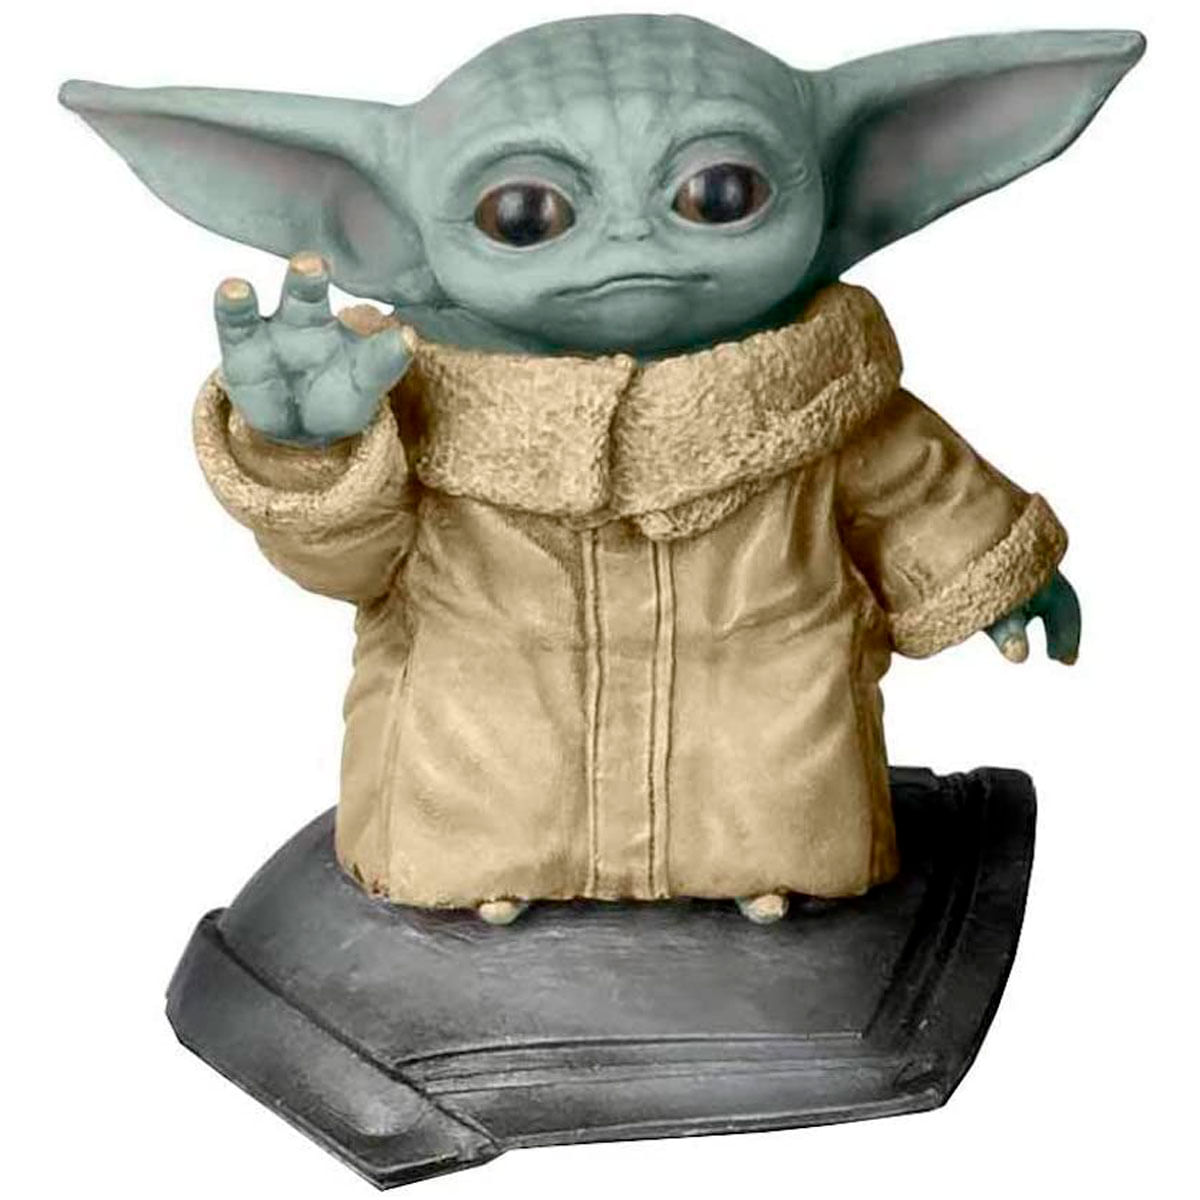 heroico Para buscar refugio Oportuno Star Wars Mandalorian Baby Yoda Accesorio Disfraz